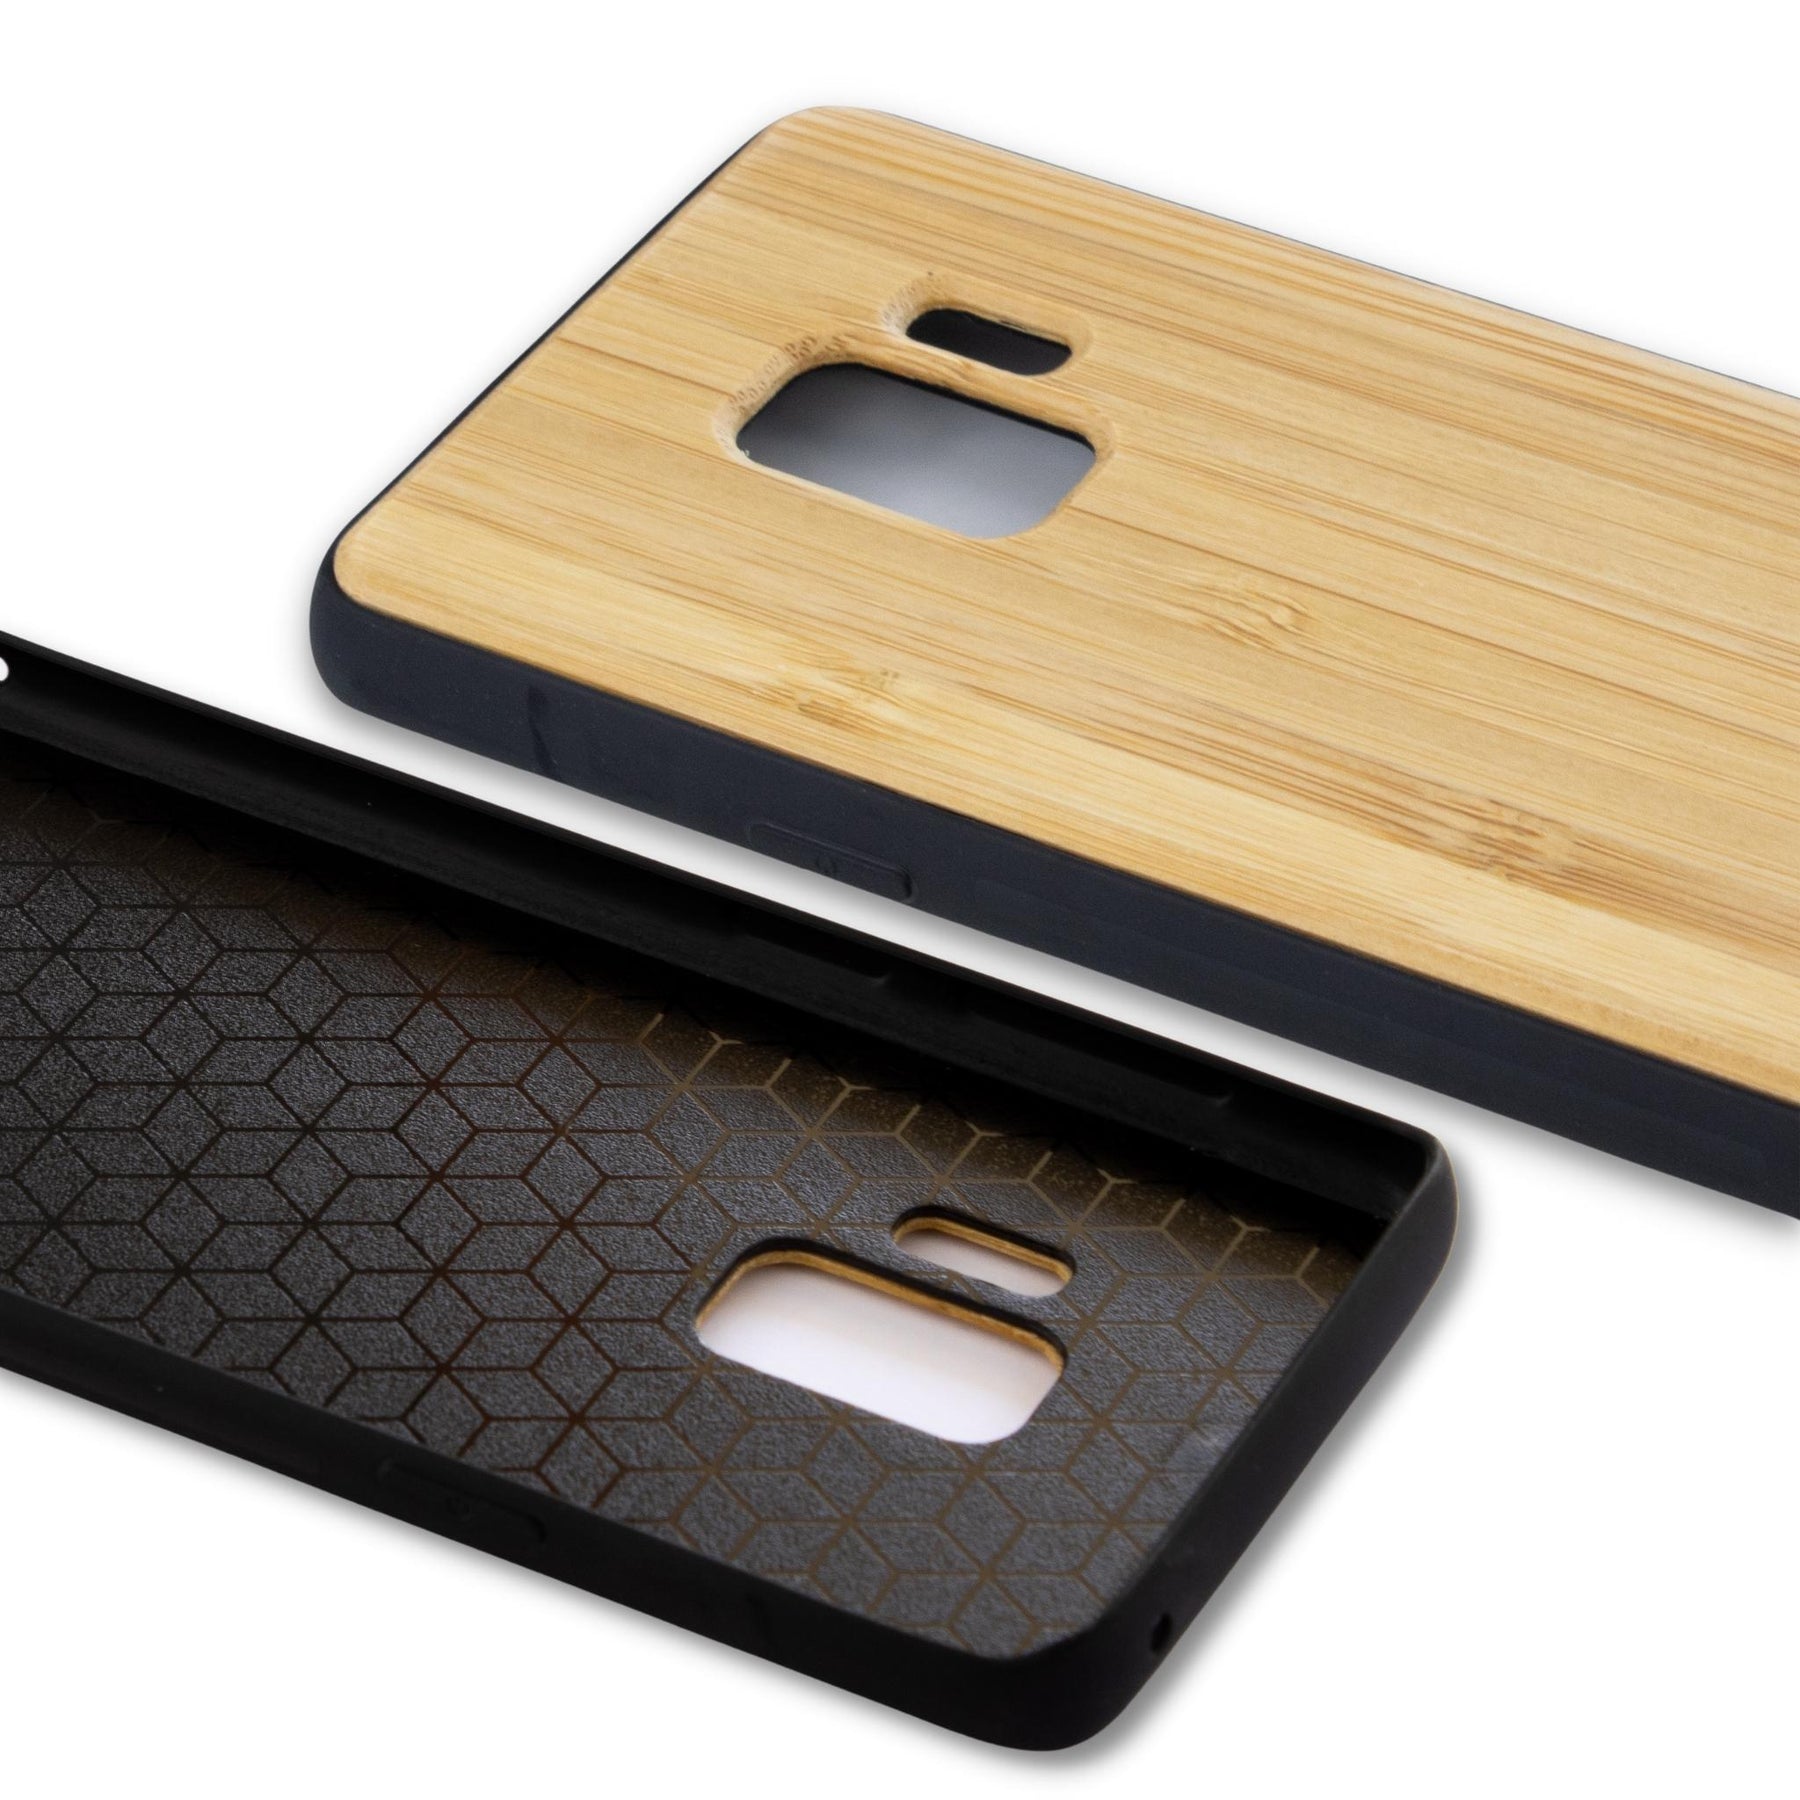 Samsung GS9+ Wooden Case + Screen Protector